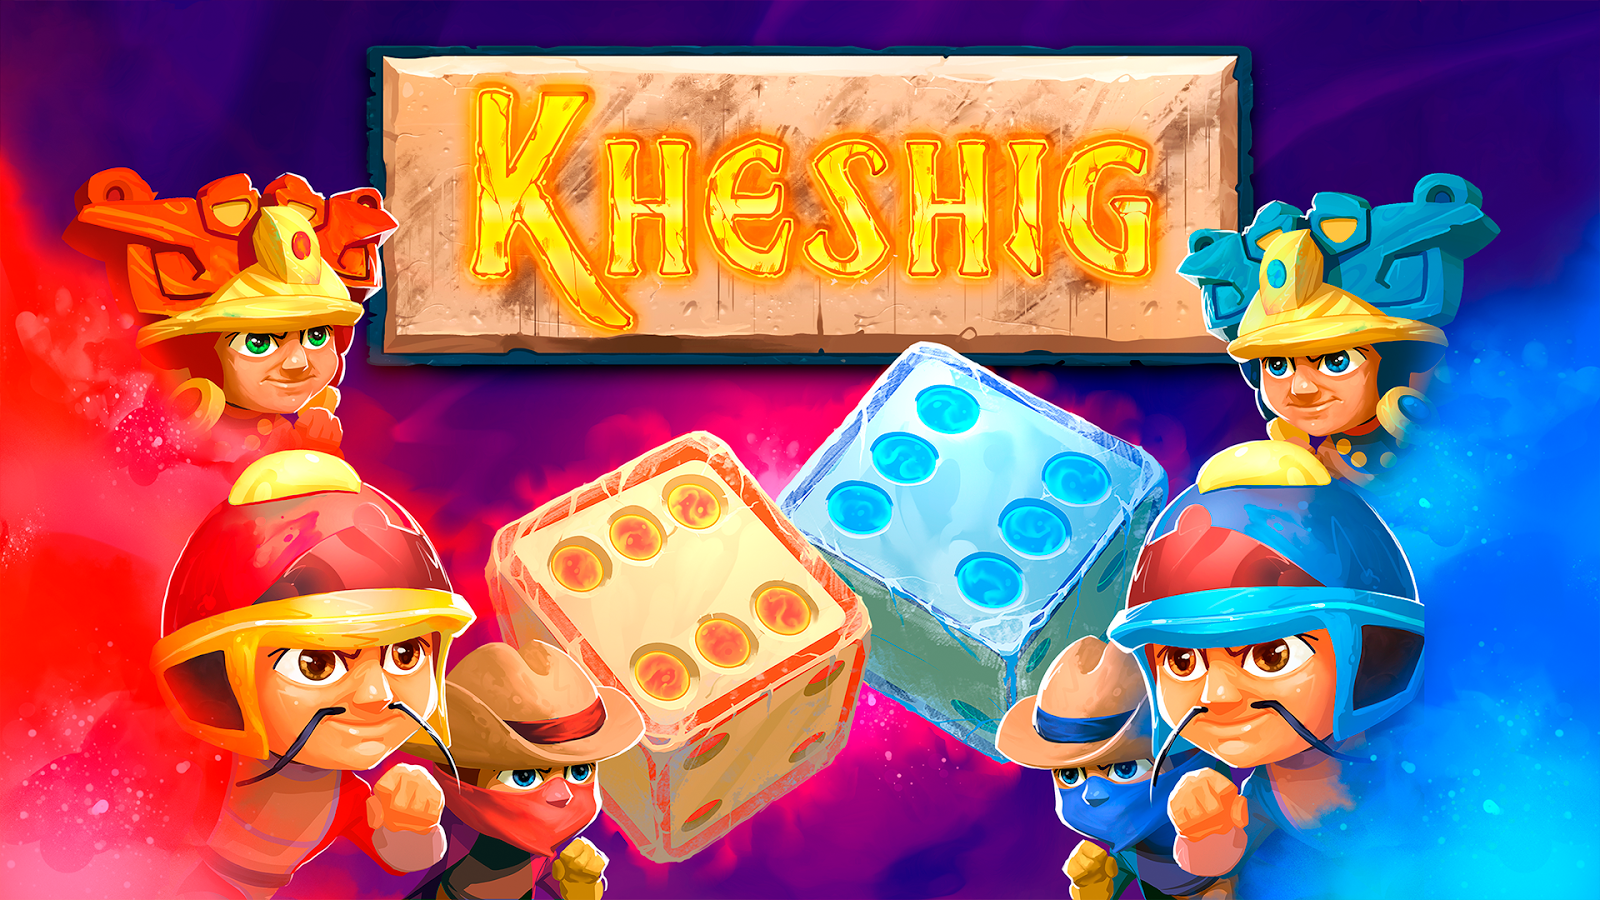    Kheshig - Conquer The World- screenshot  